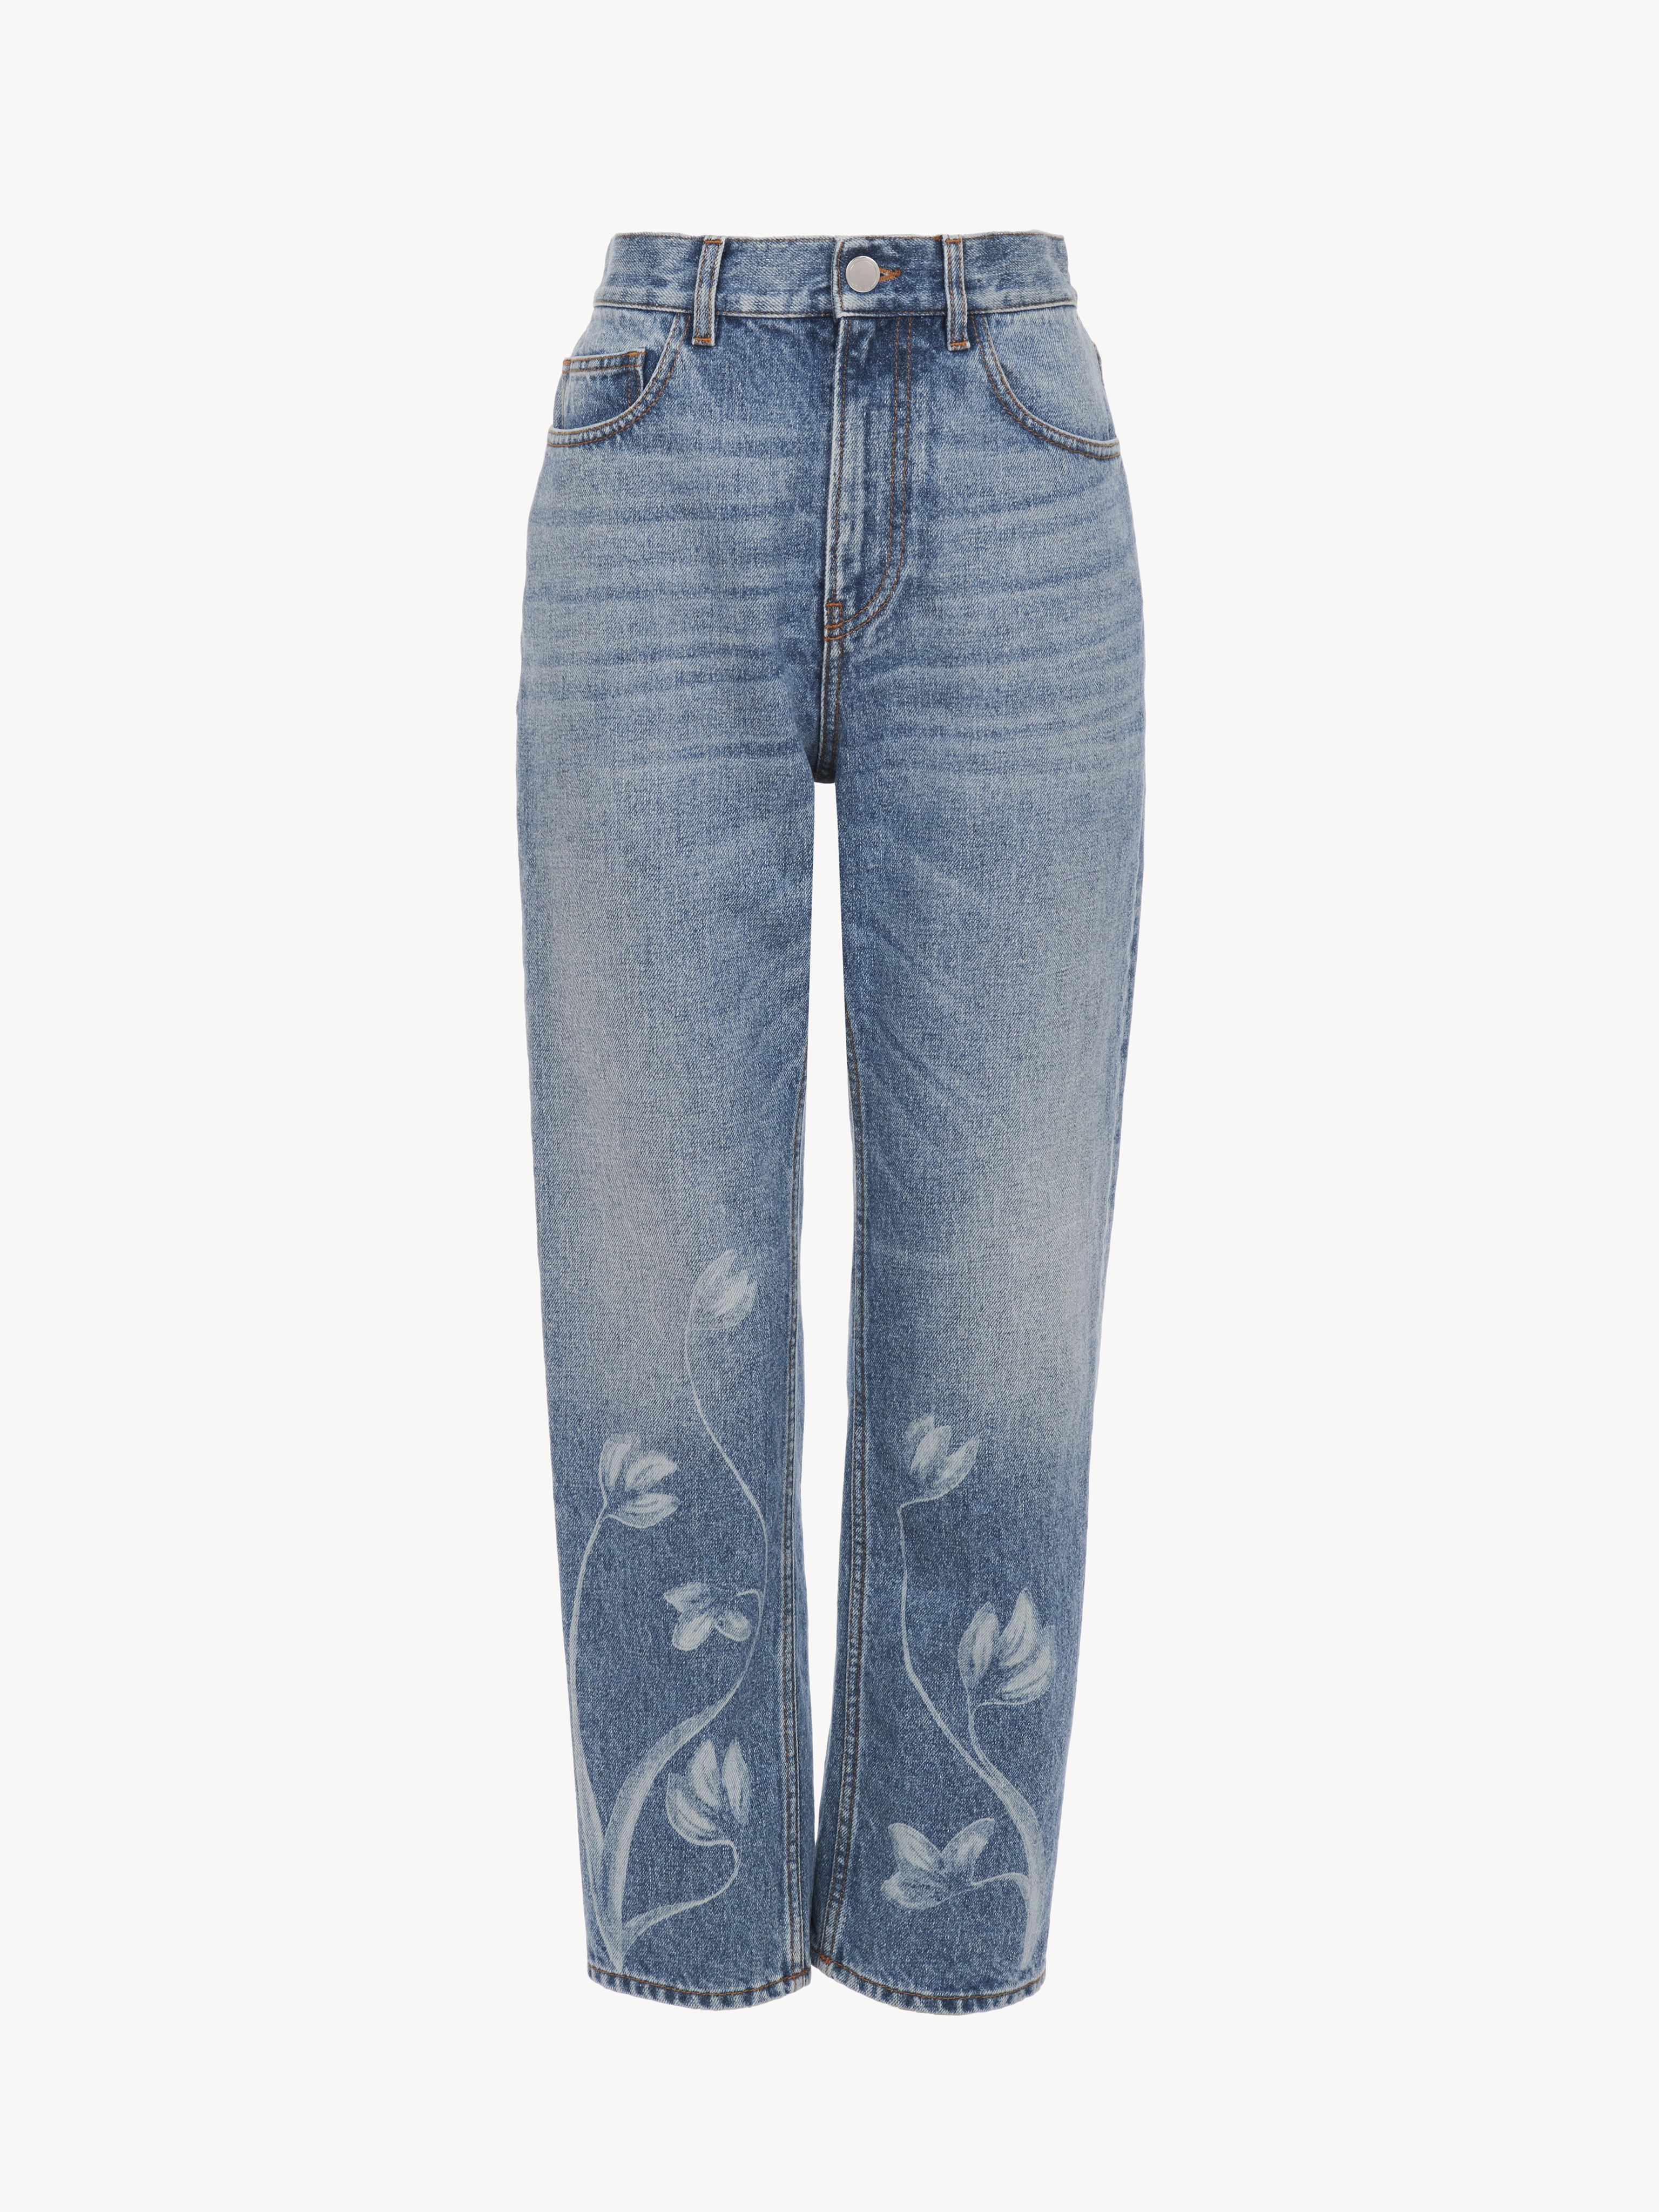 Chloé Straight Cropped Jeans Blue Size 28 87% Cotton, 13% Hemp